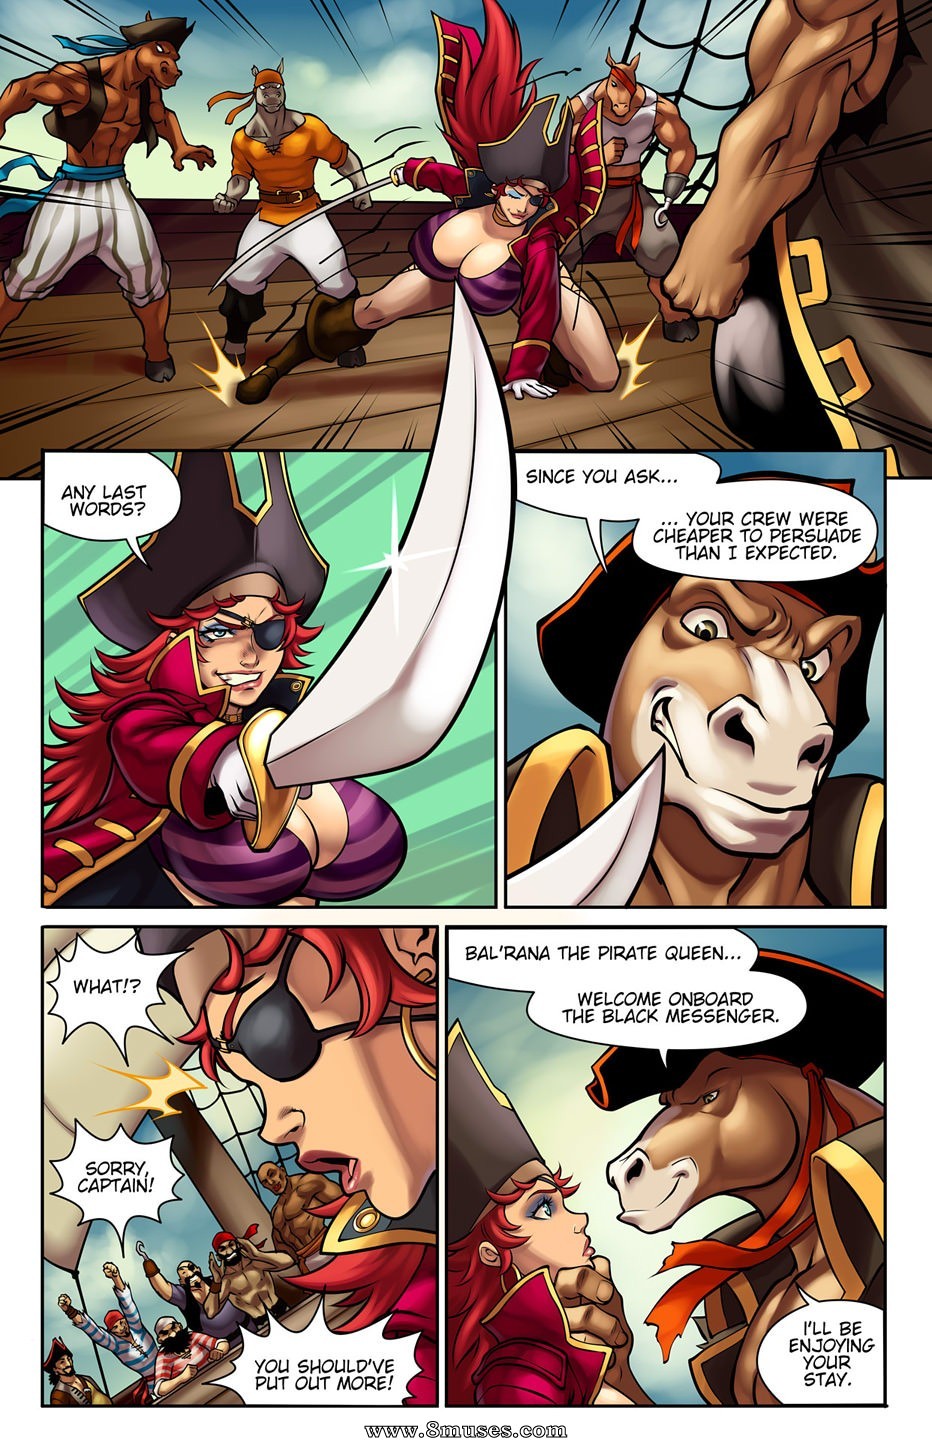 Cartoon Pirates - Tales of Bal Rana: Crossed and Boned - KingComiX.com